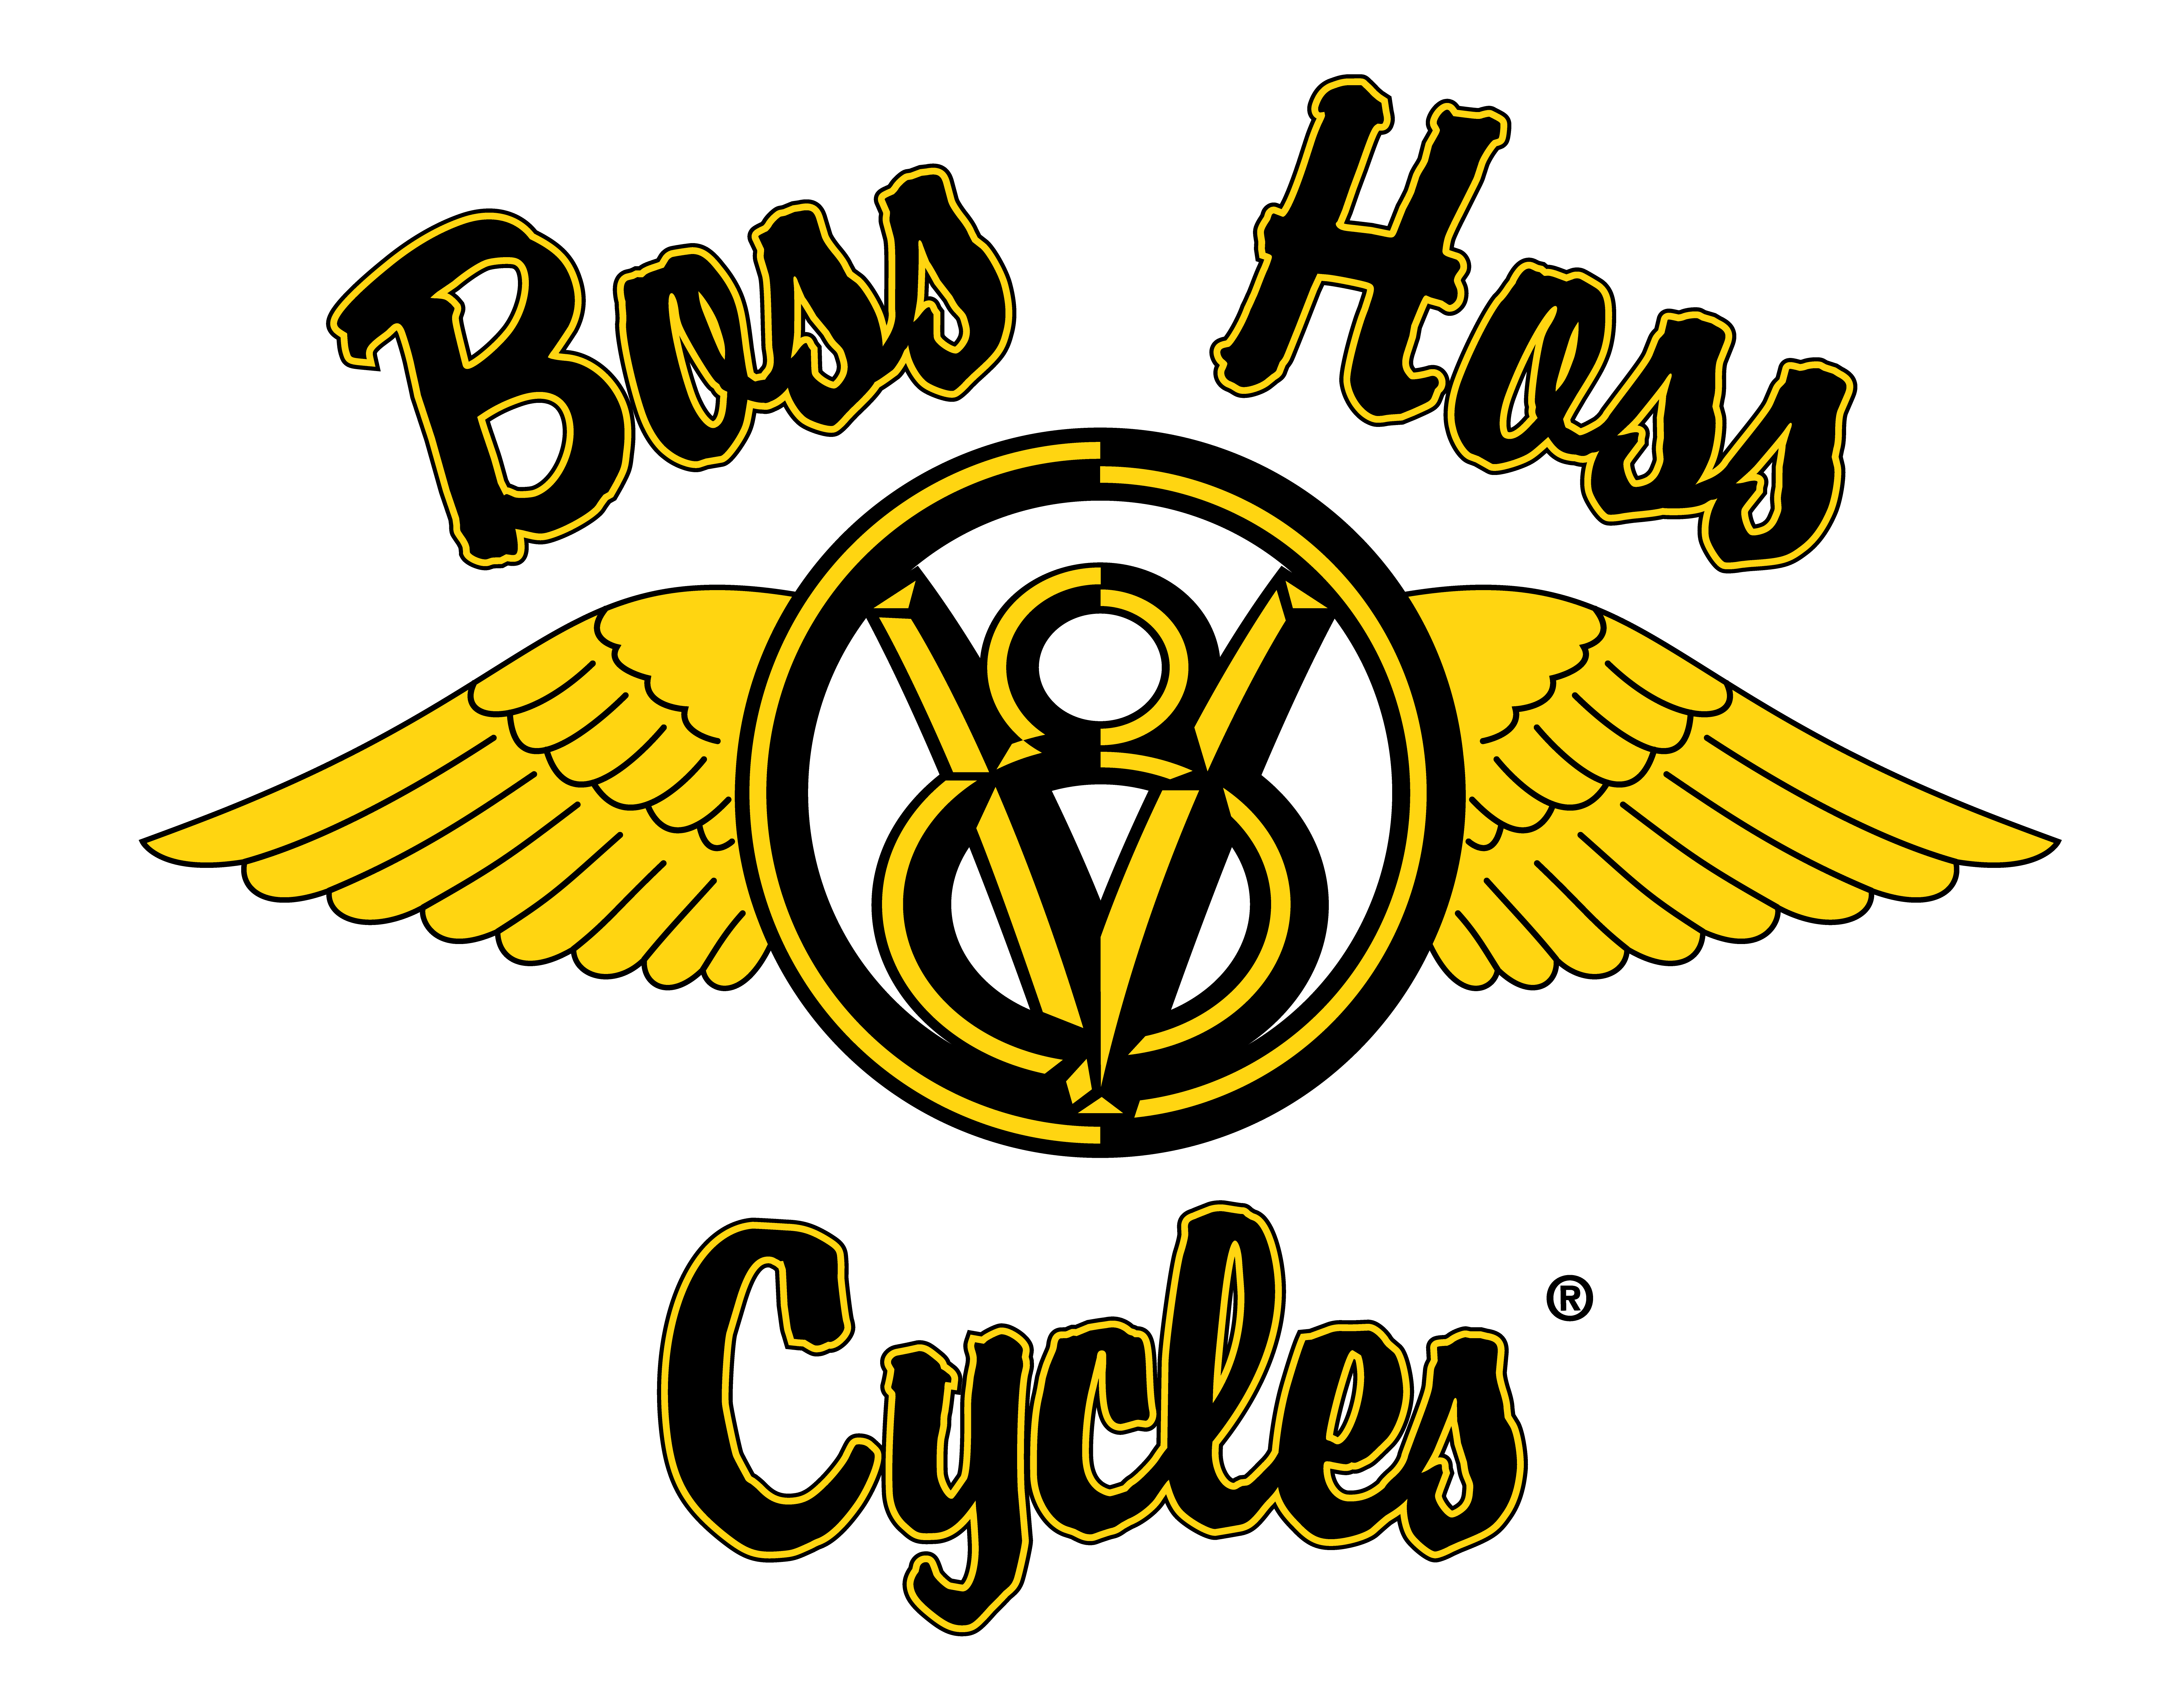 Boss Hoss Motorcycles vintage